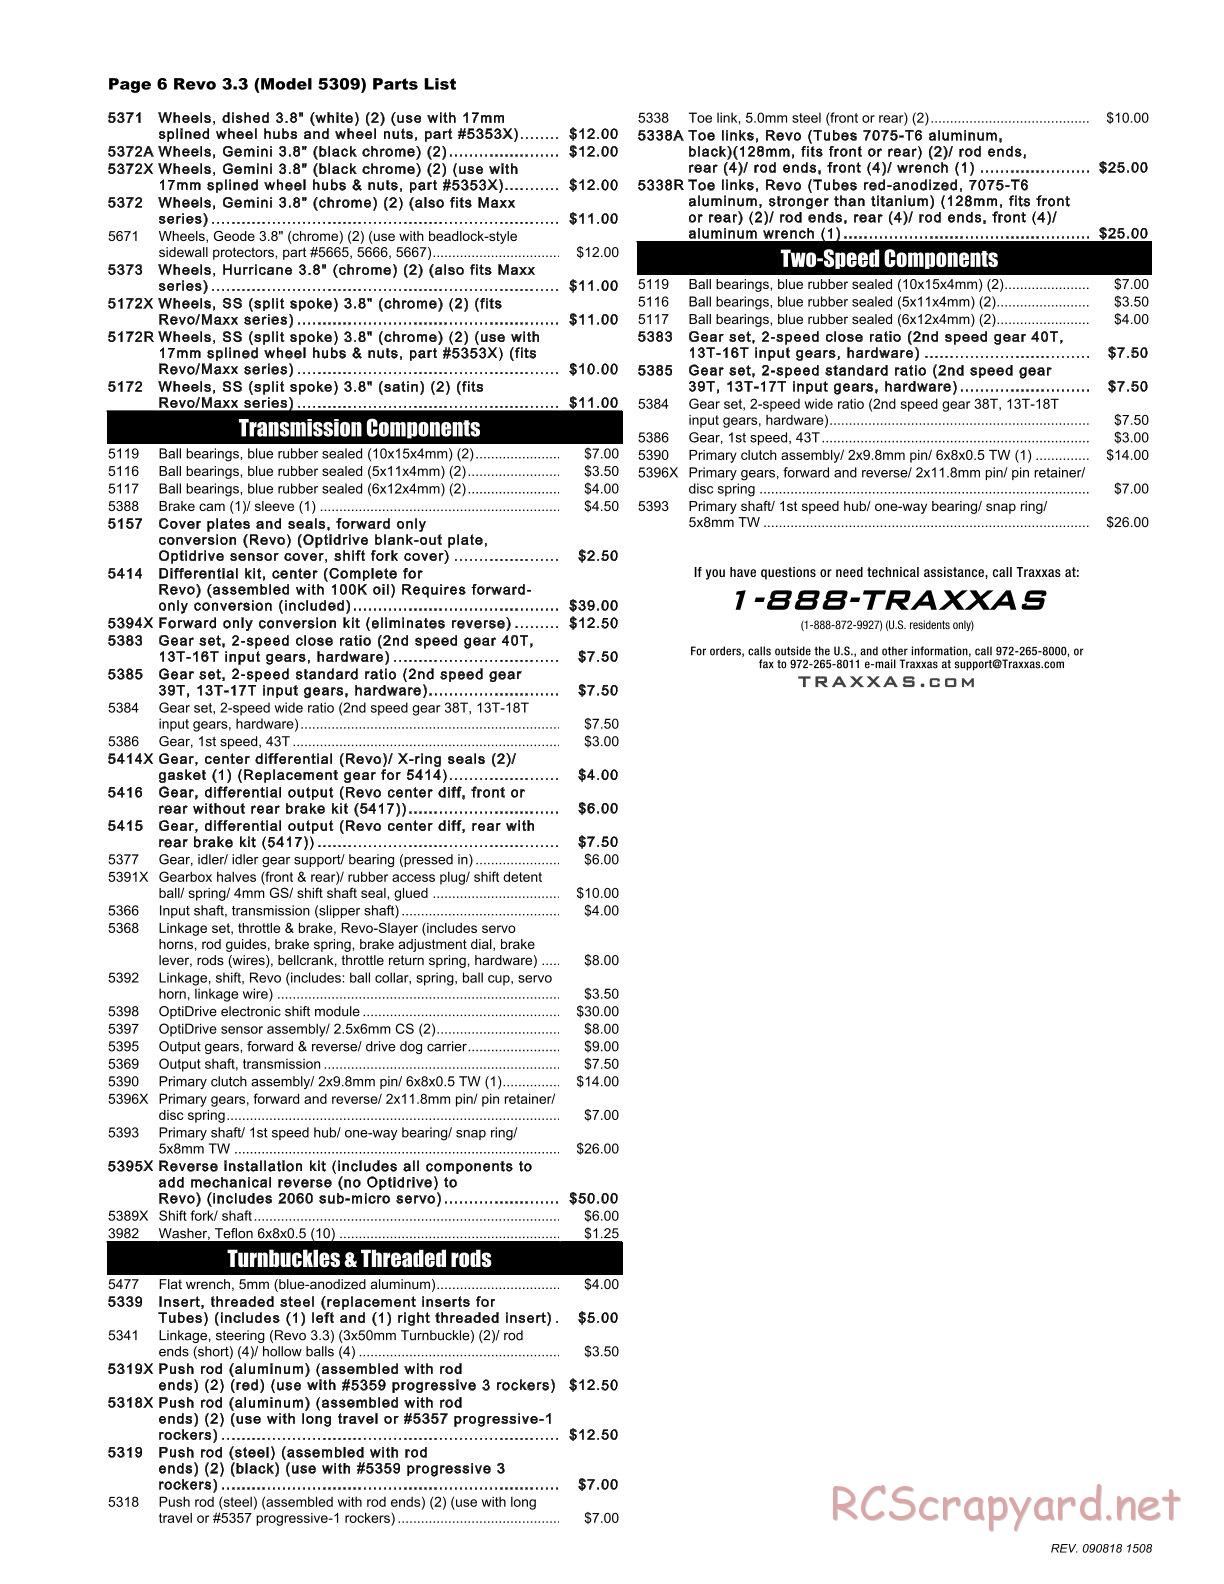 Traxxas - Revo 3.3 - Parts List - Page 6